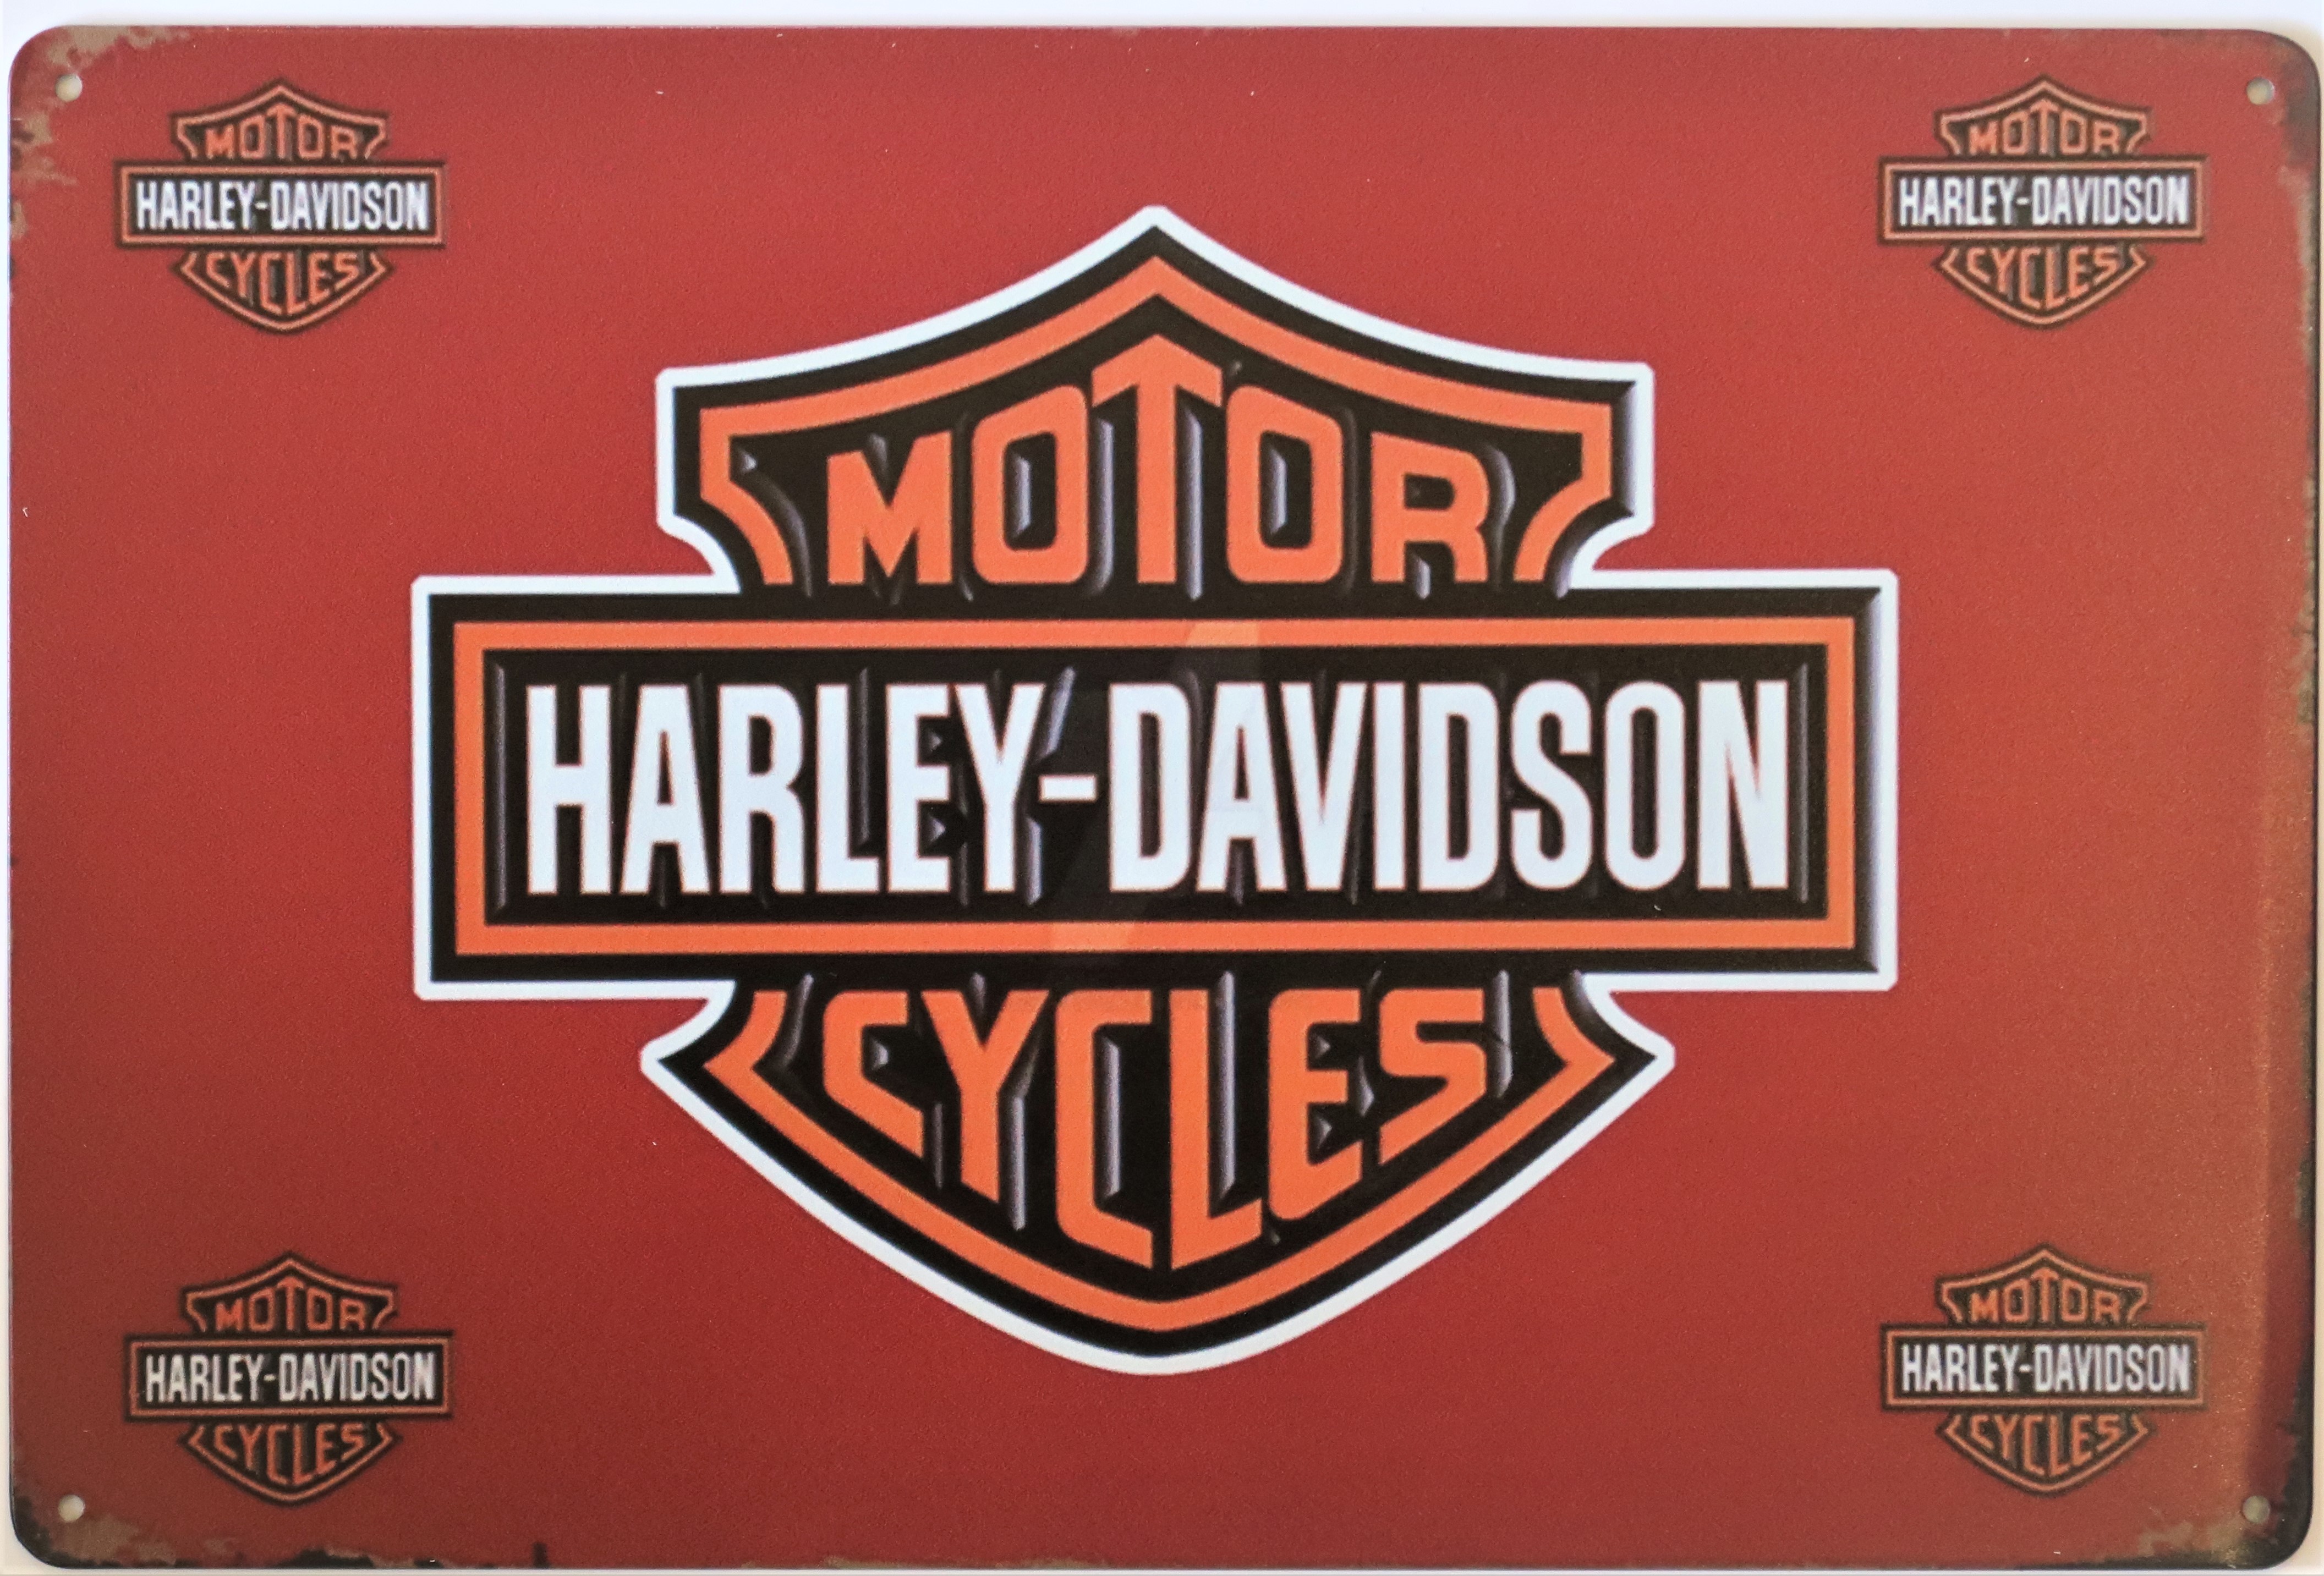 Harley Davidson Aluminium Motorcycle Garage Metal Sign 30cm x 20cm - 12 Inches x 8 Inches